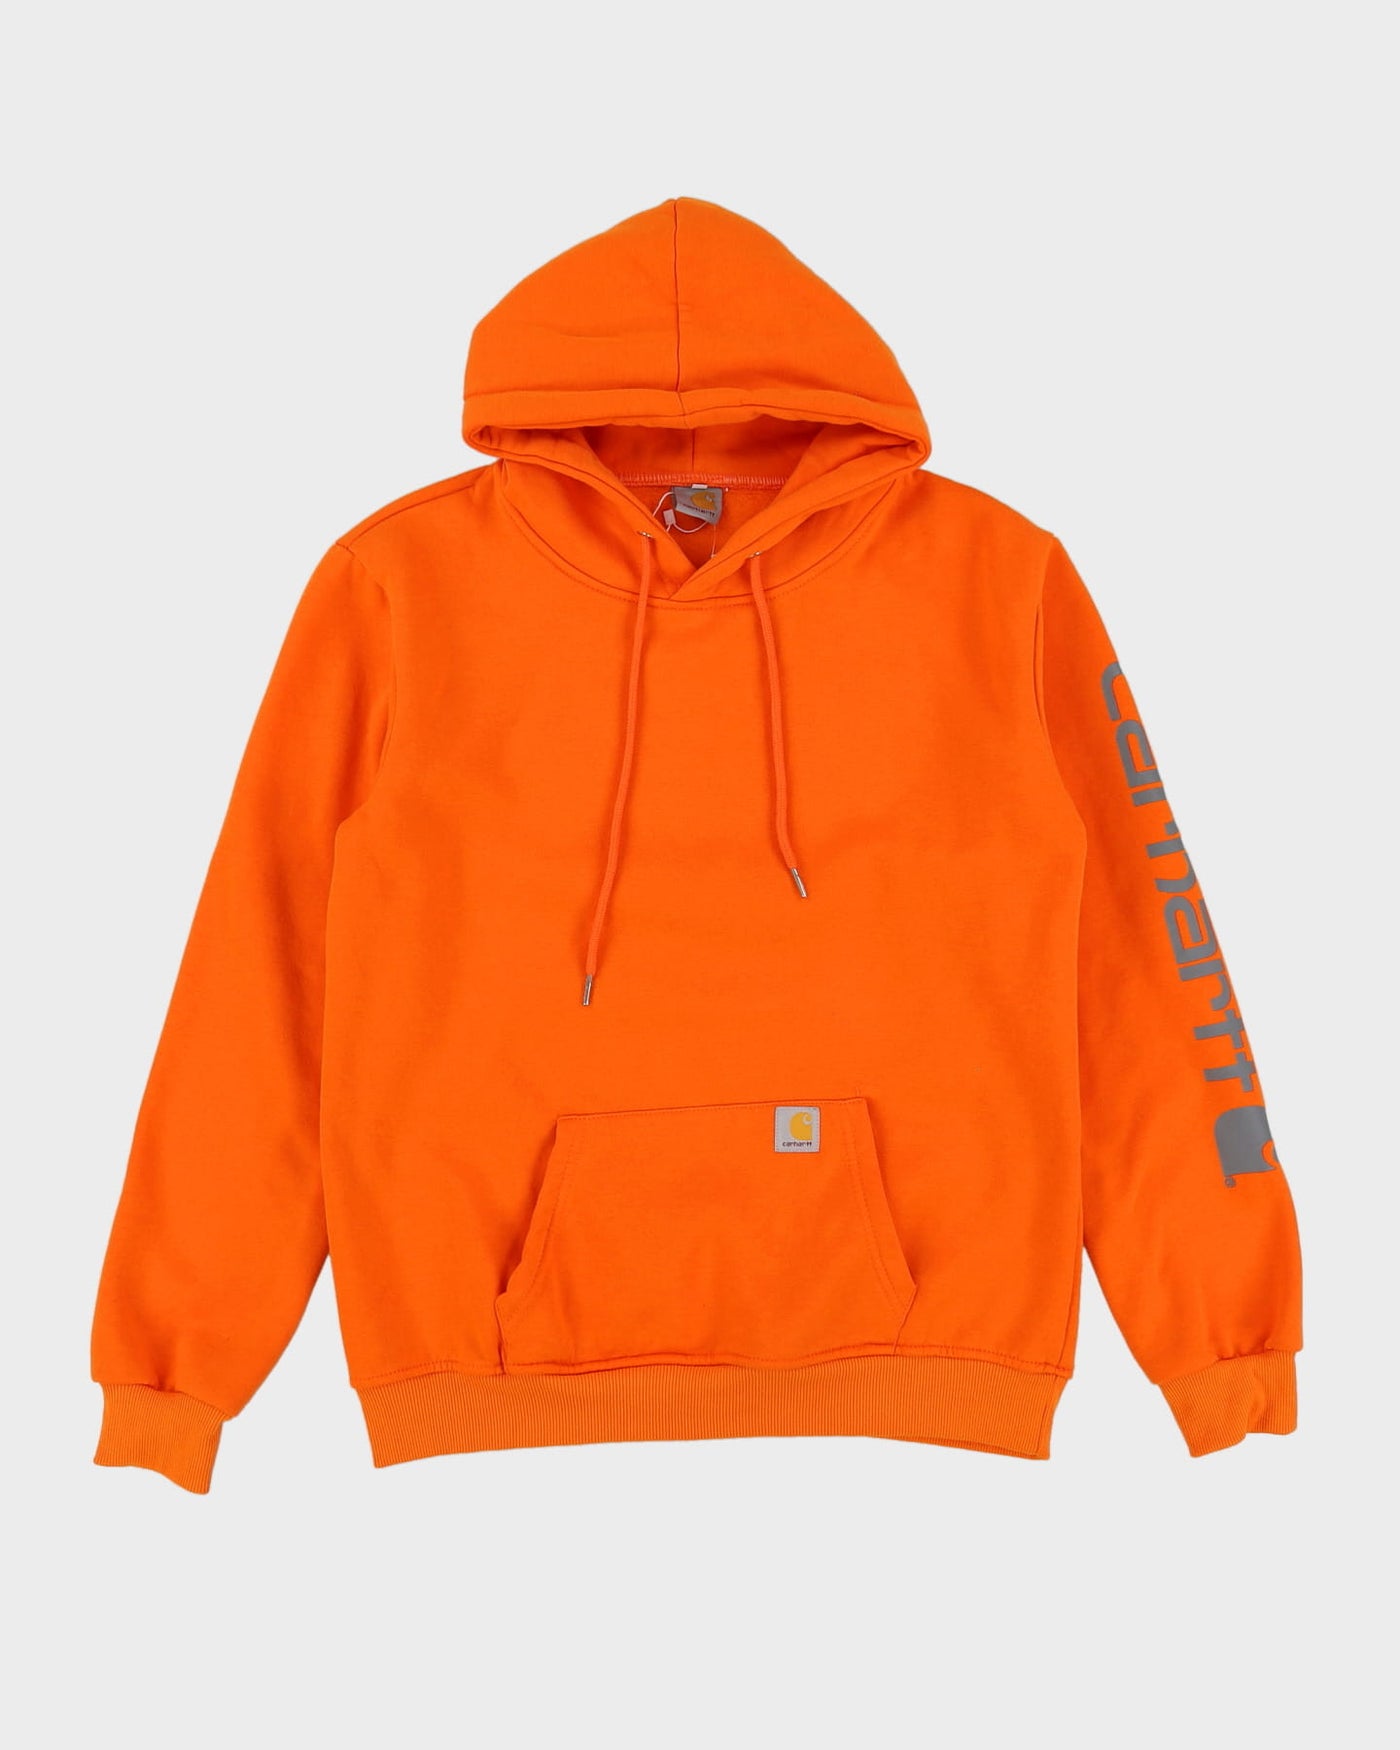 Carhartt Vibrant Orange Sweatshirt - L